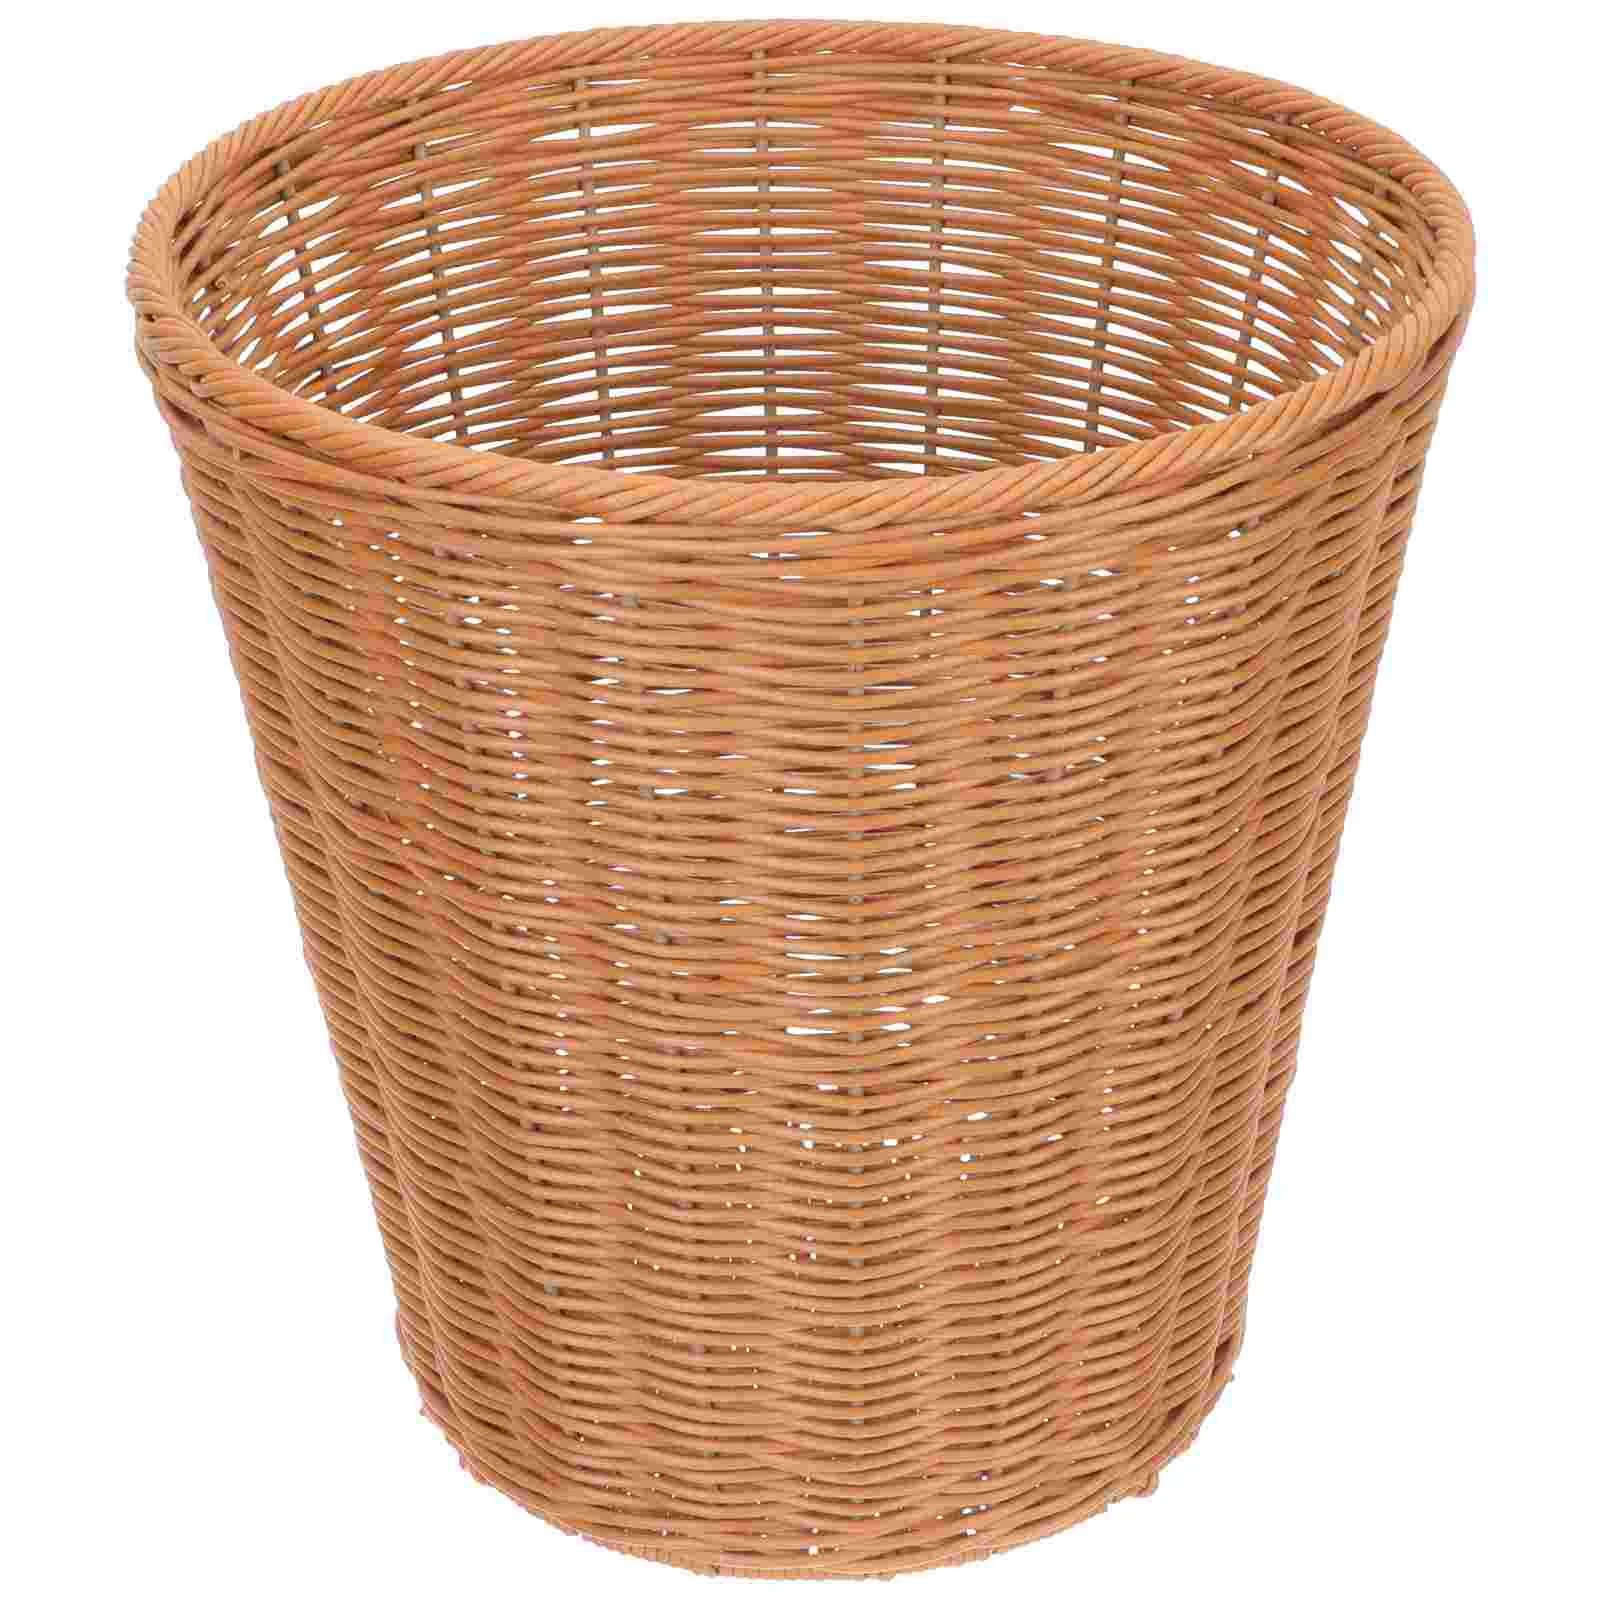 

Basket Trash Waste Rattan Garbage Kitchen Wicker Can Containers Storage Bin Woven Seagrass Laundry Baskets Bins Pot Hyacinth